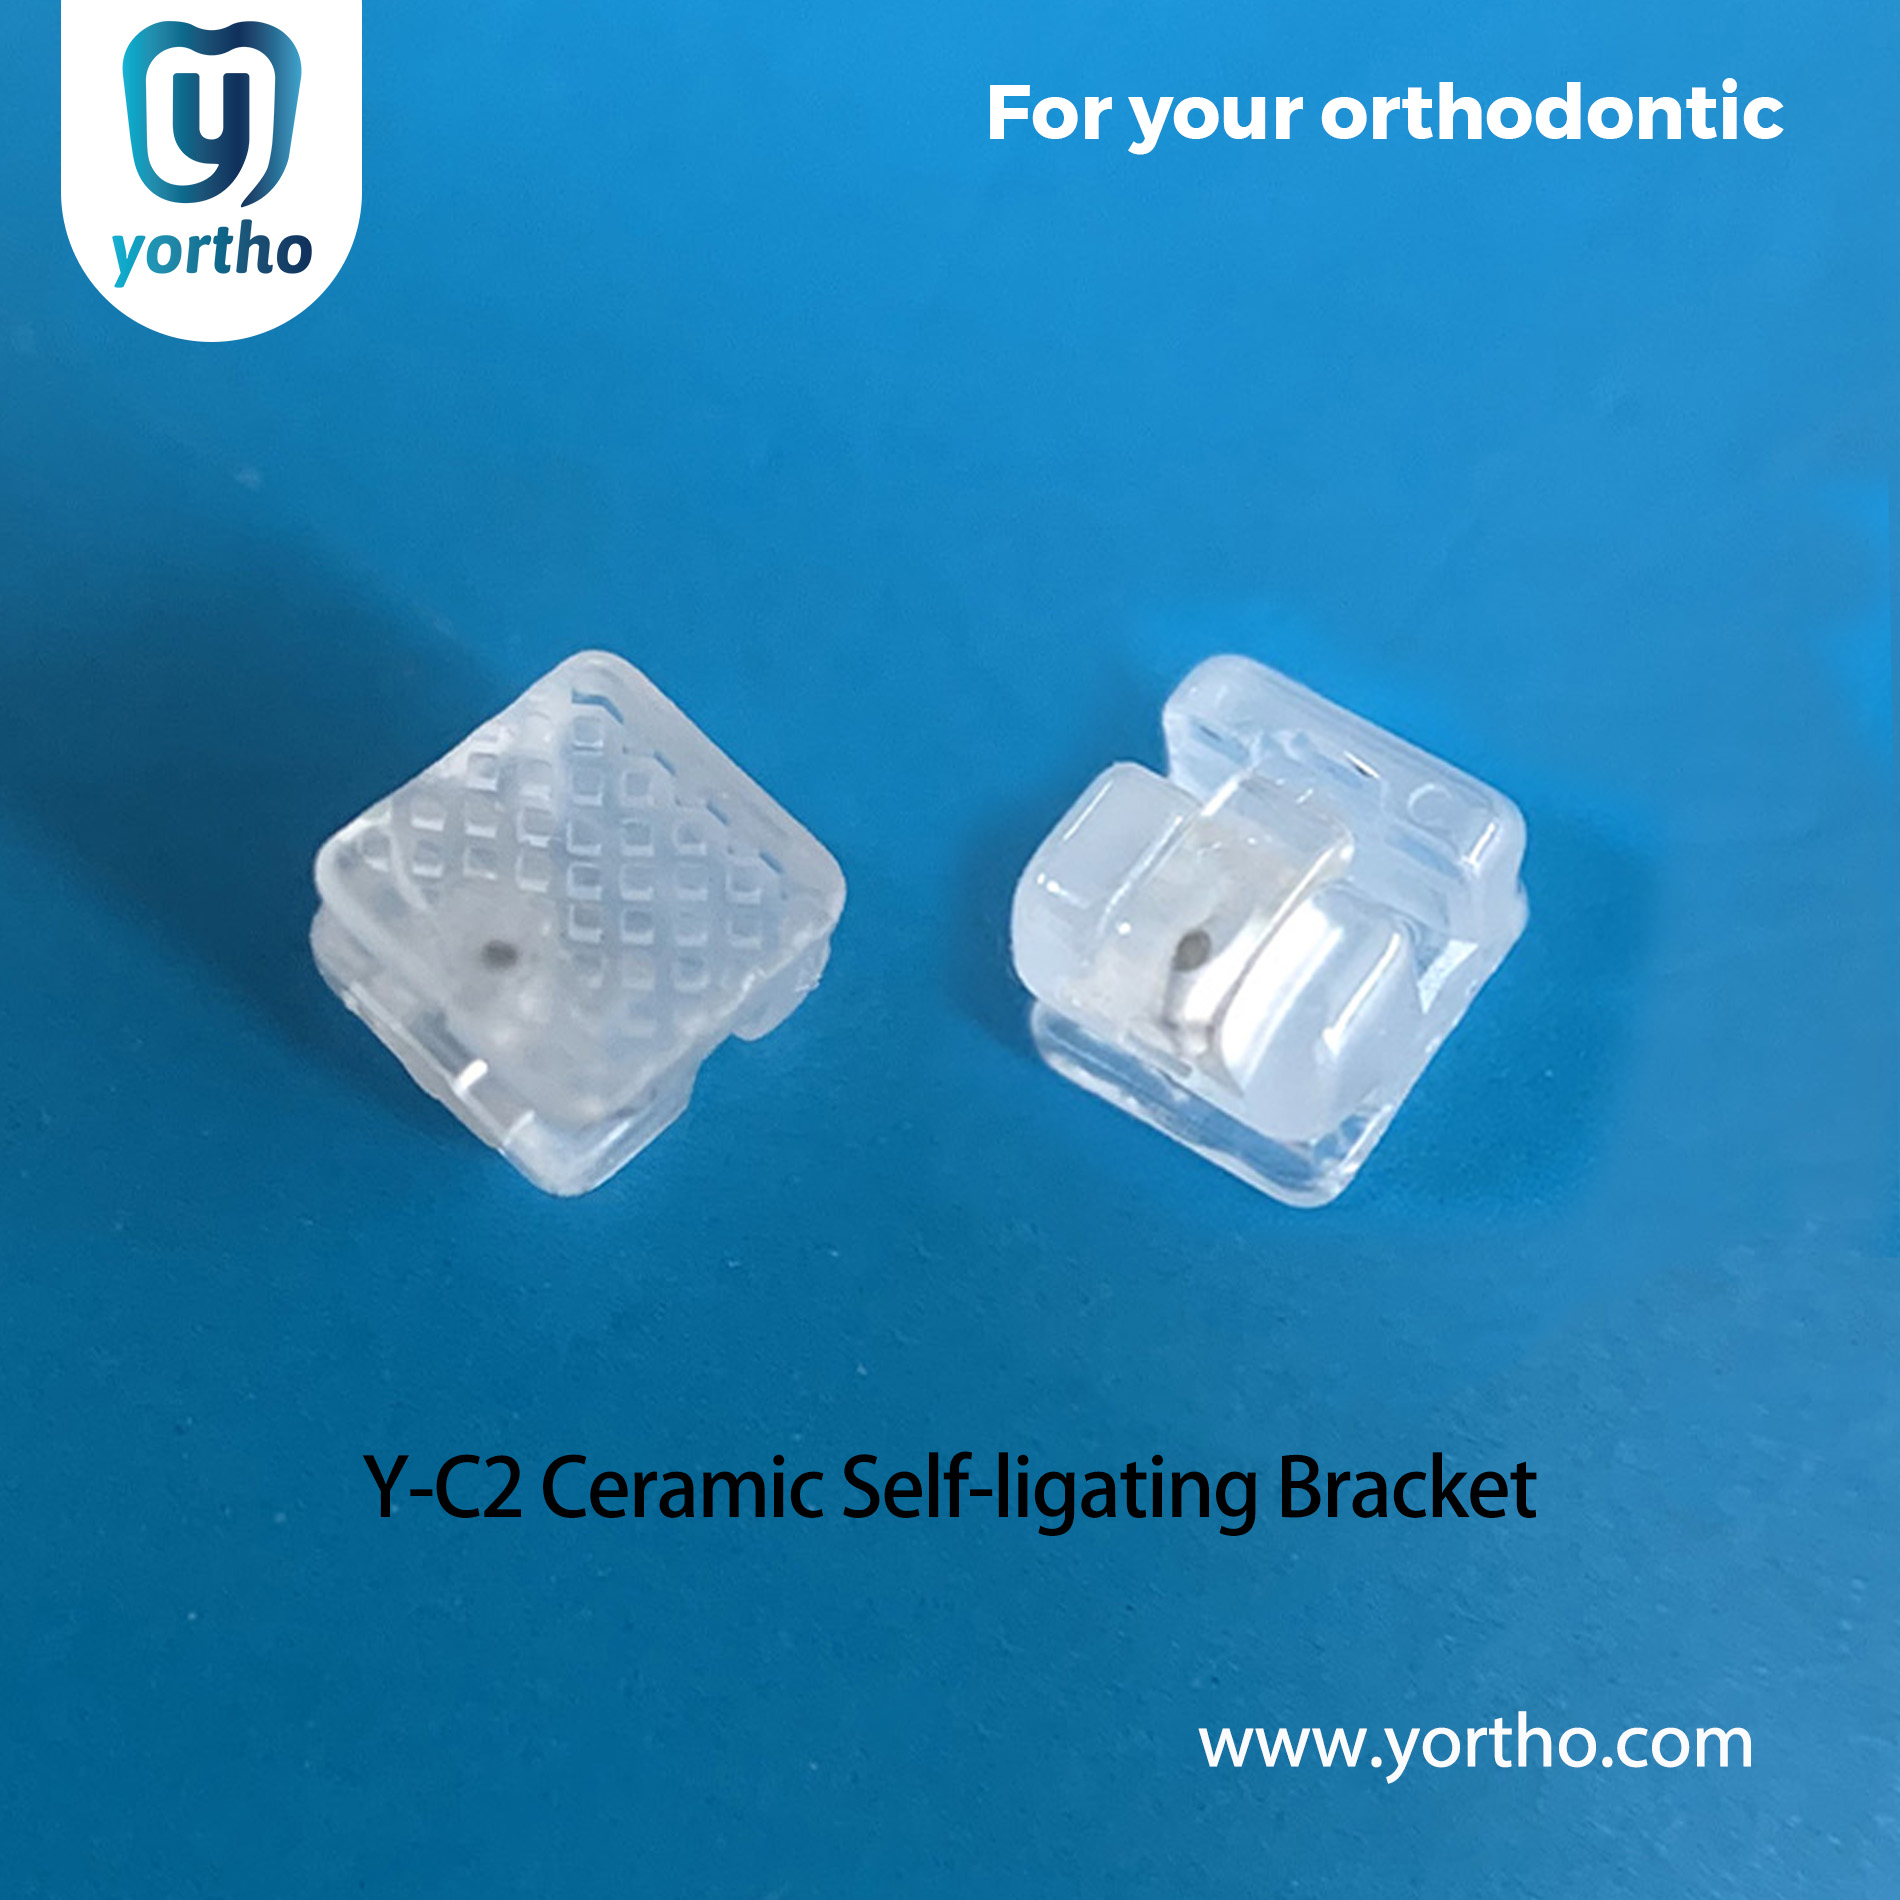 Ceramic Self-ligating bracket